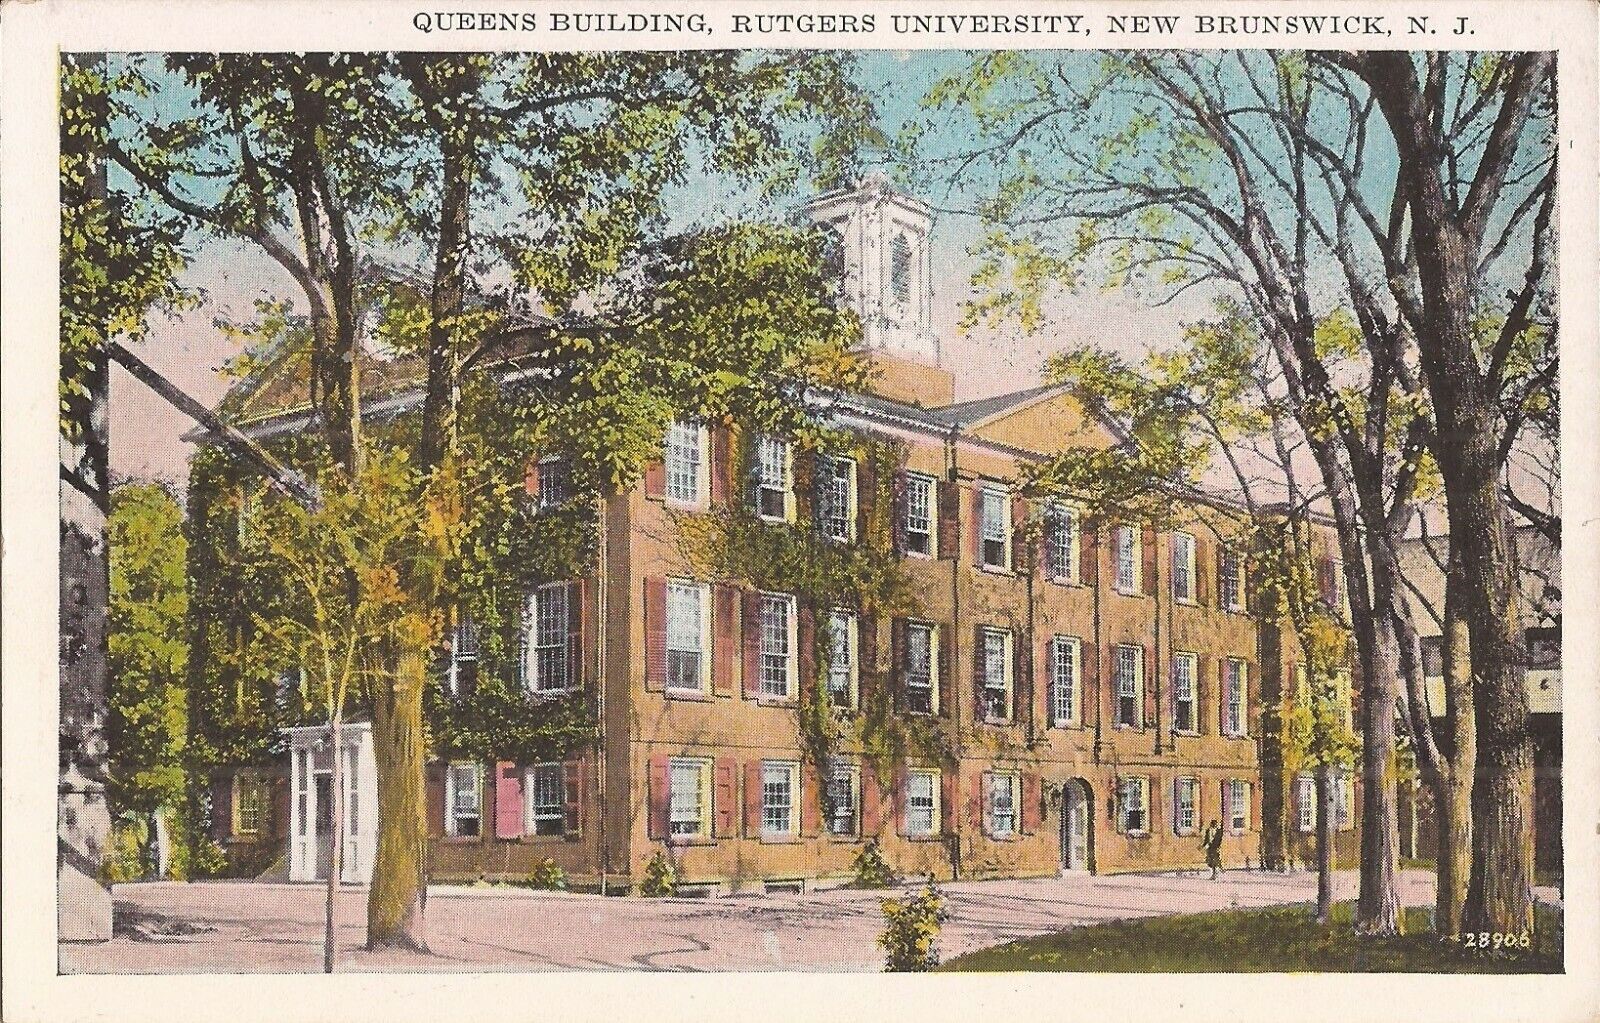 New Brunswick, NEW JERSEY - Rutgers University - Queens Building